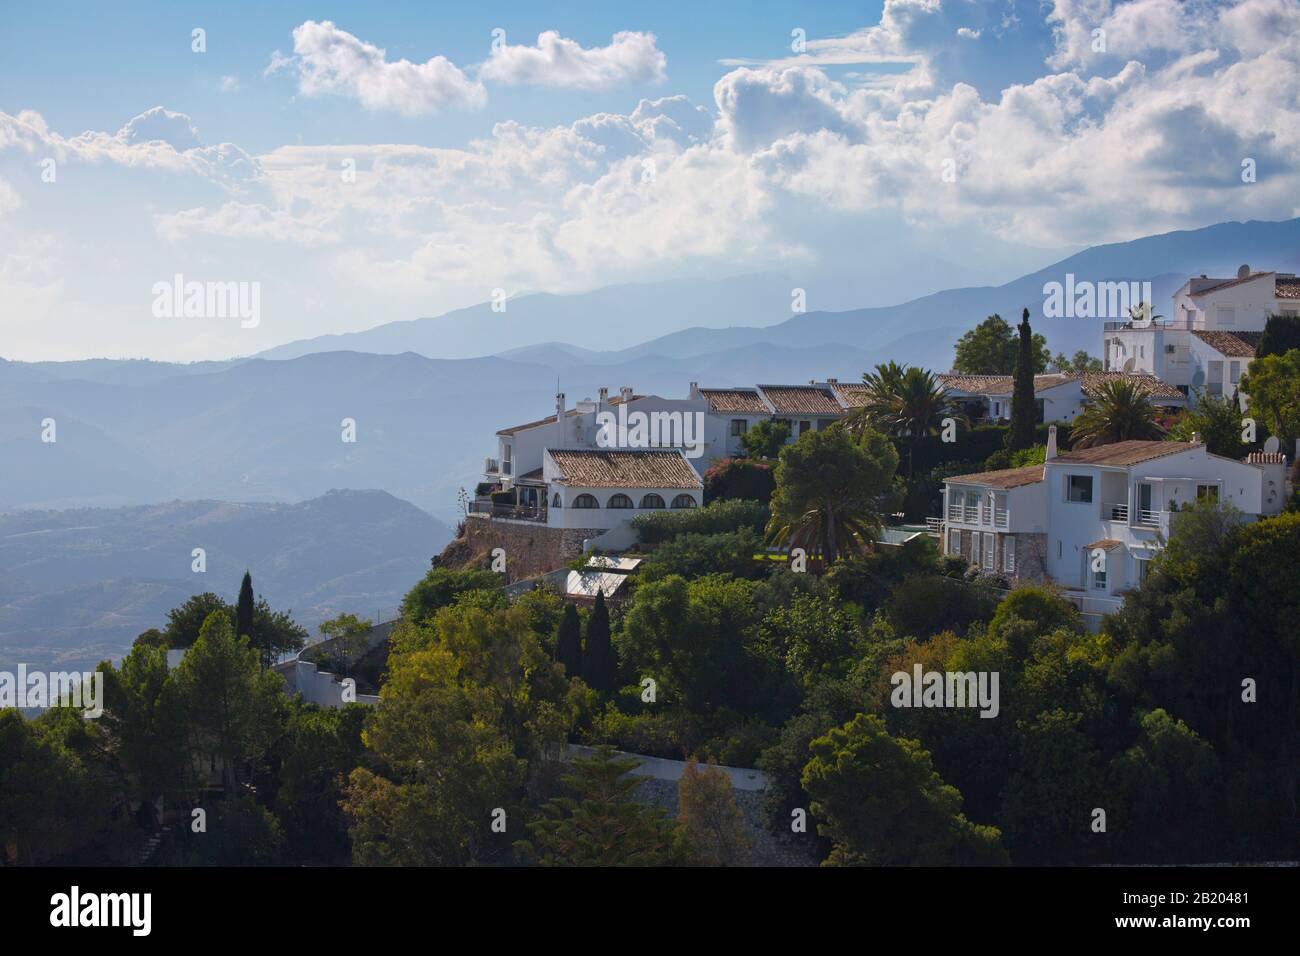 Beautiful villas in Mijas in the mountains Stock Photo